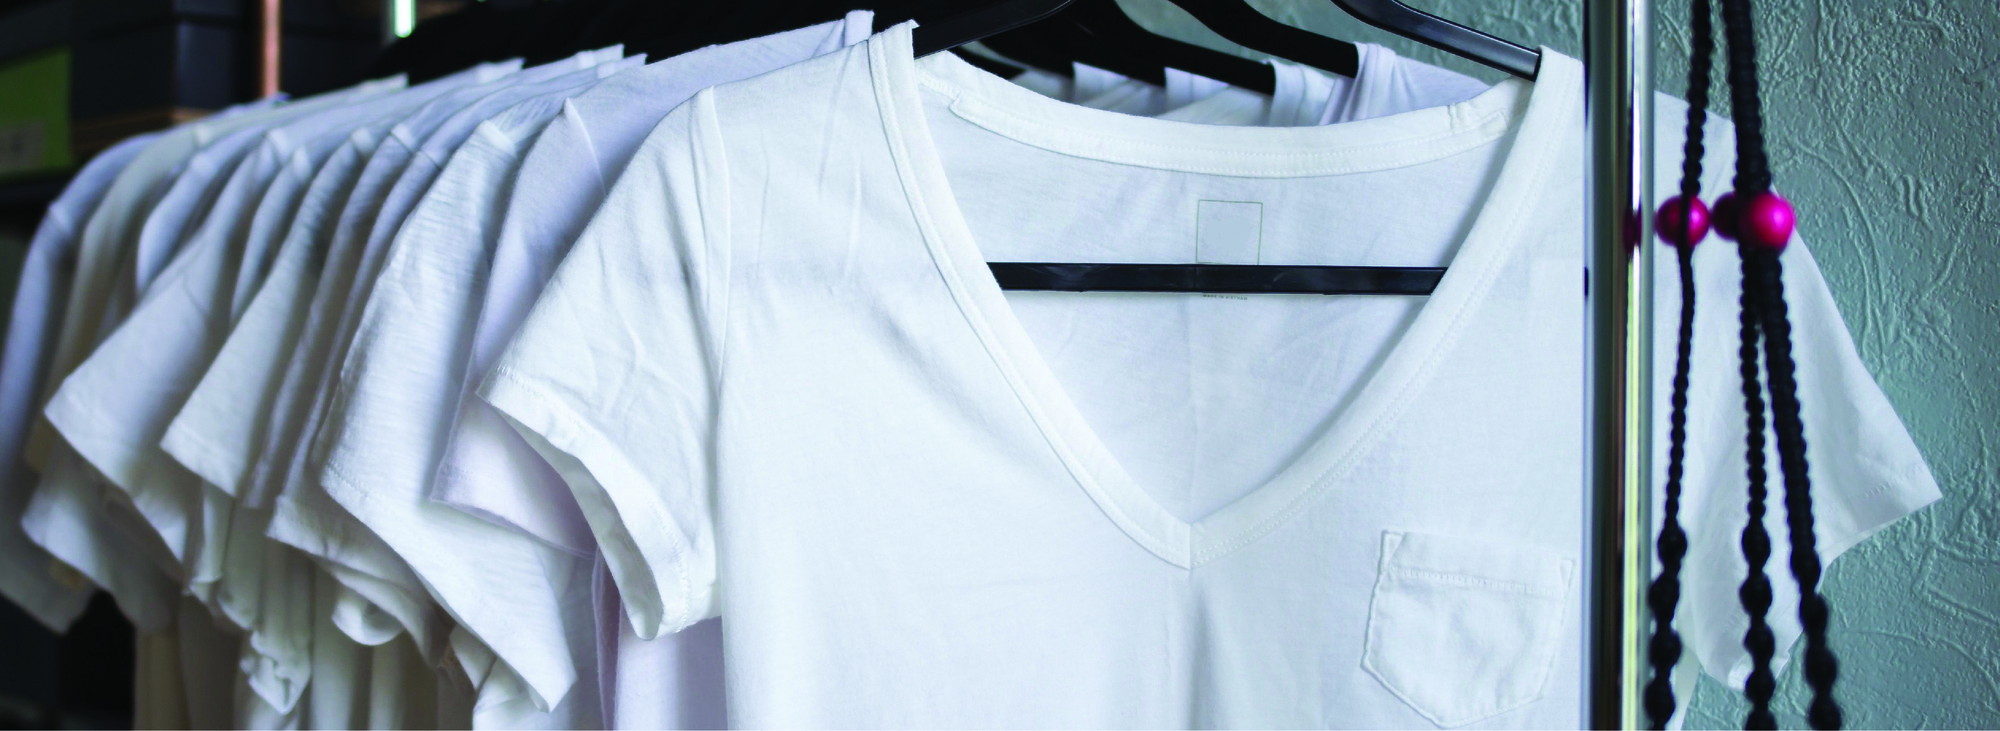 rack of white t shirts